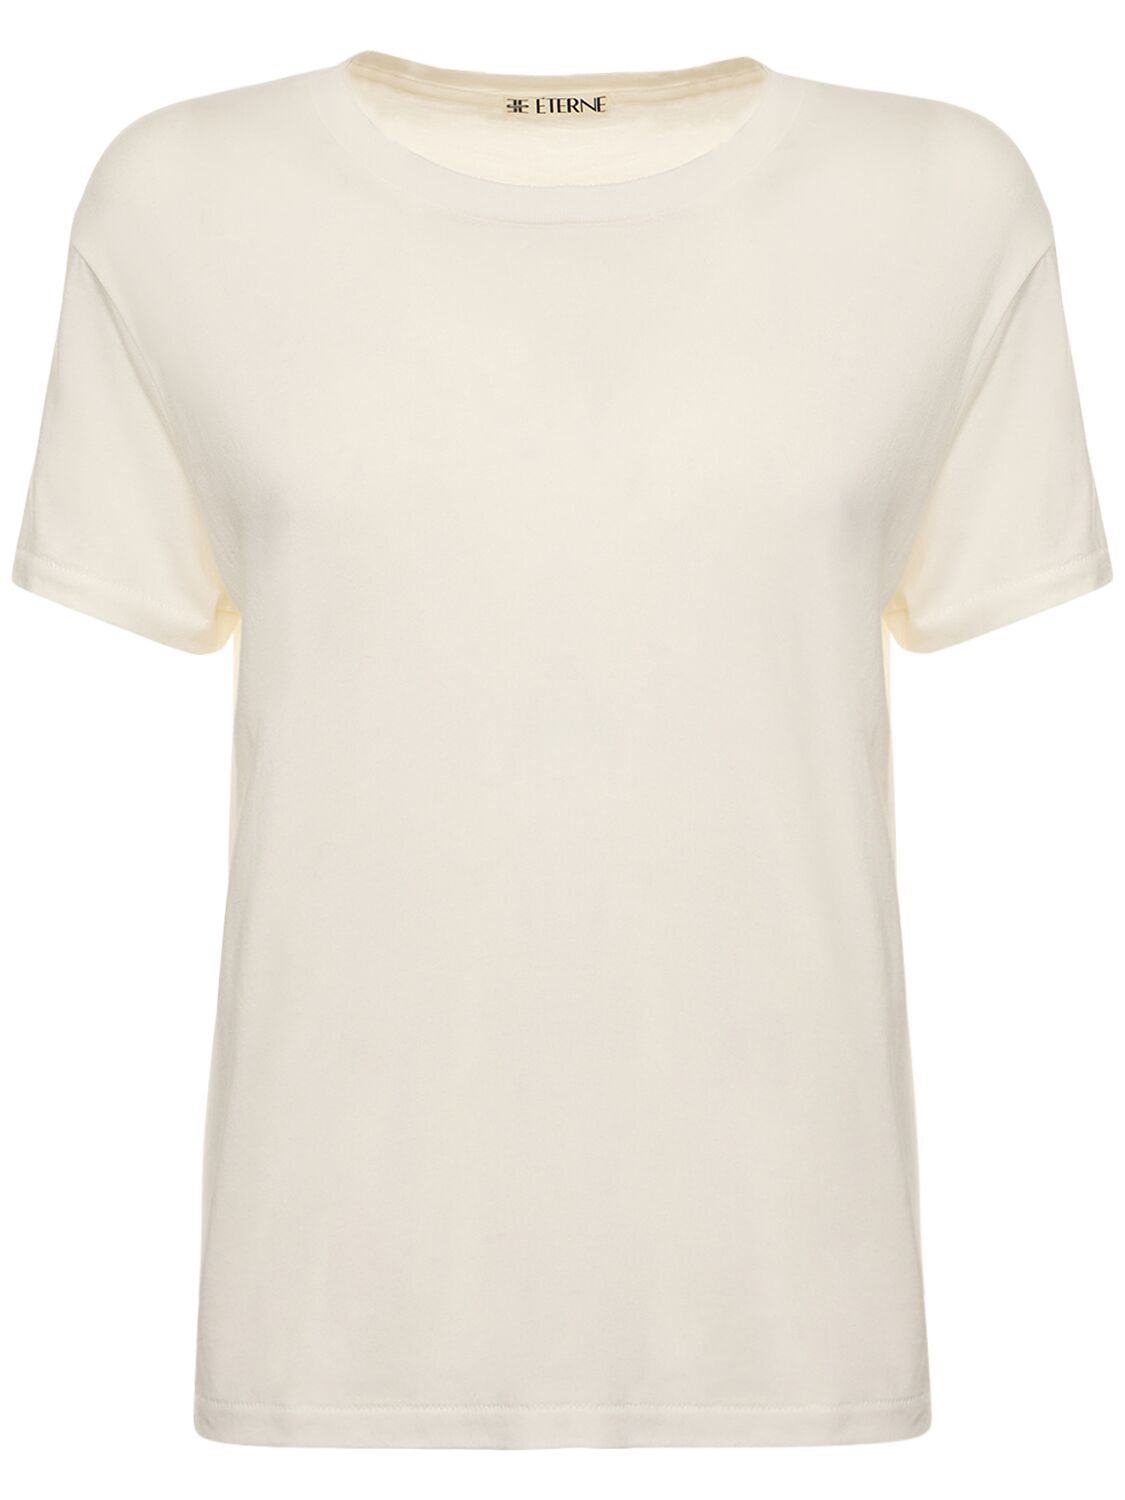 Éterne Short Sleeve Cotton T-shirt In Ivory